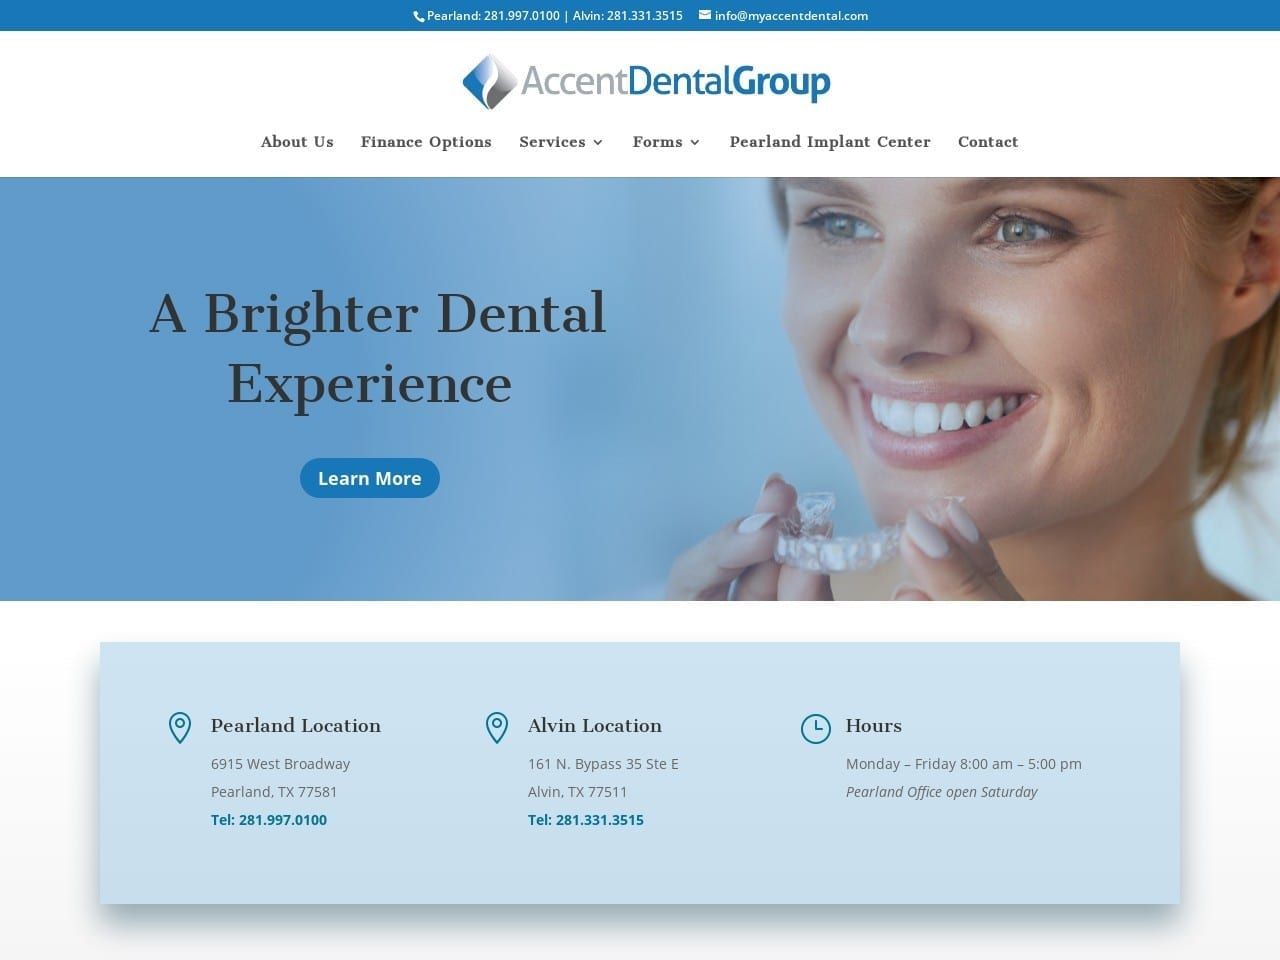 Accent Dental Group Website Screenshot from accentdentalgroup.com